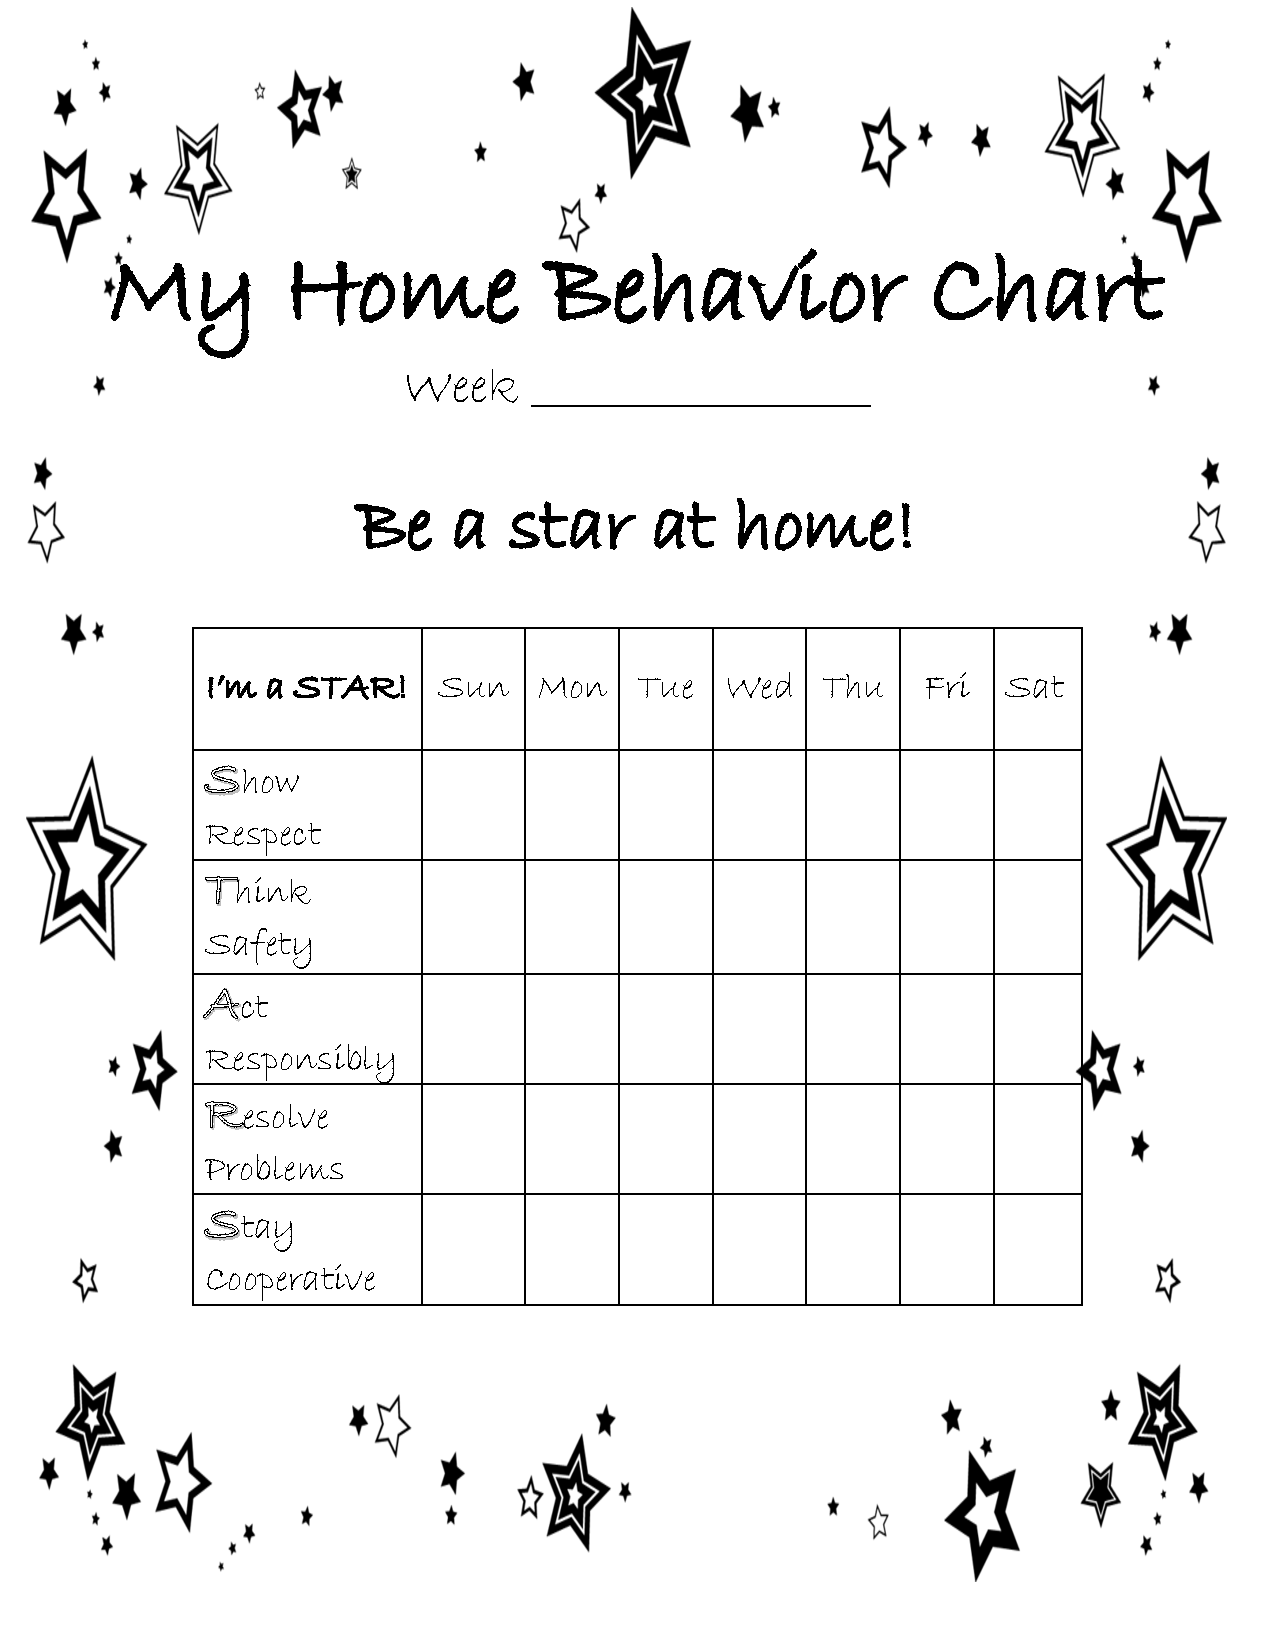 At Home Behavior Chart | Kid Stuff | Home behavior charts, Free 